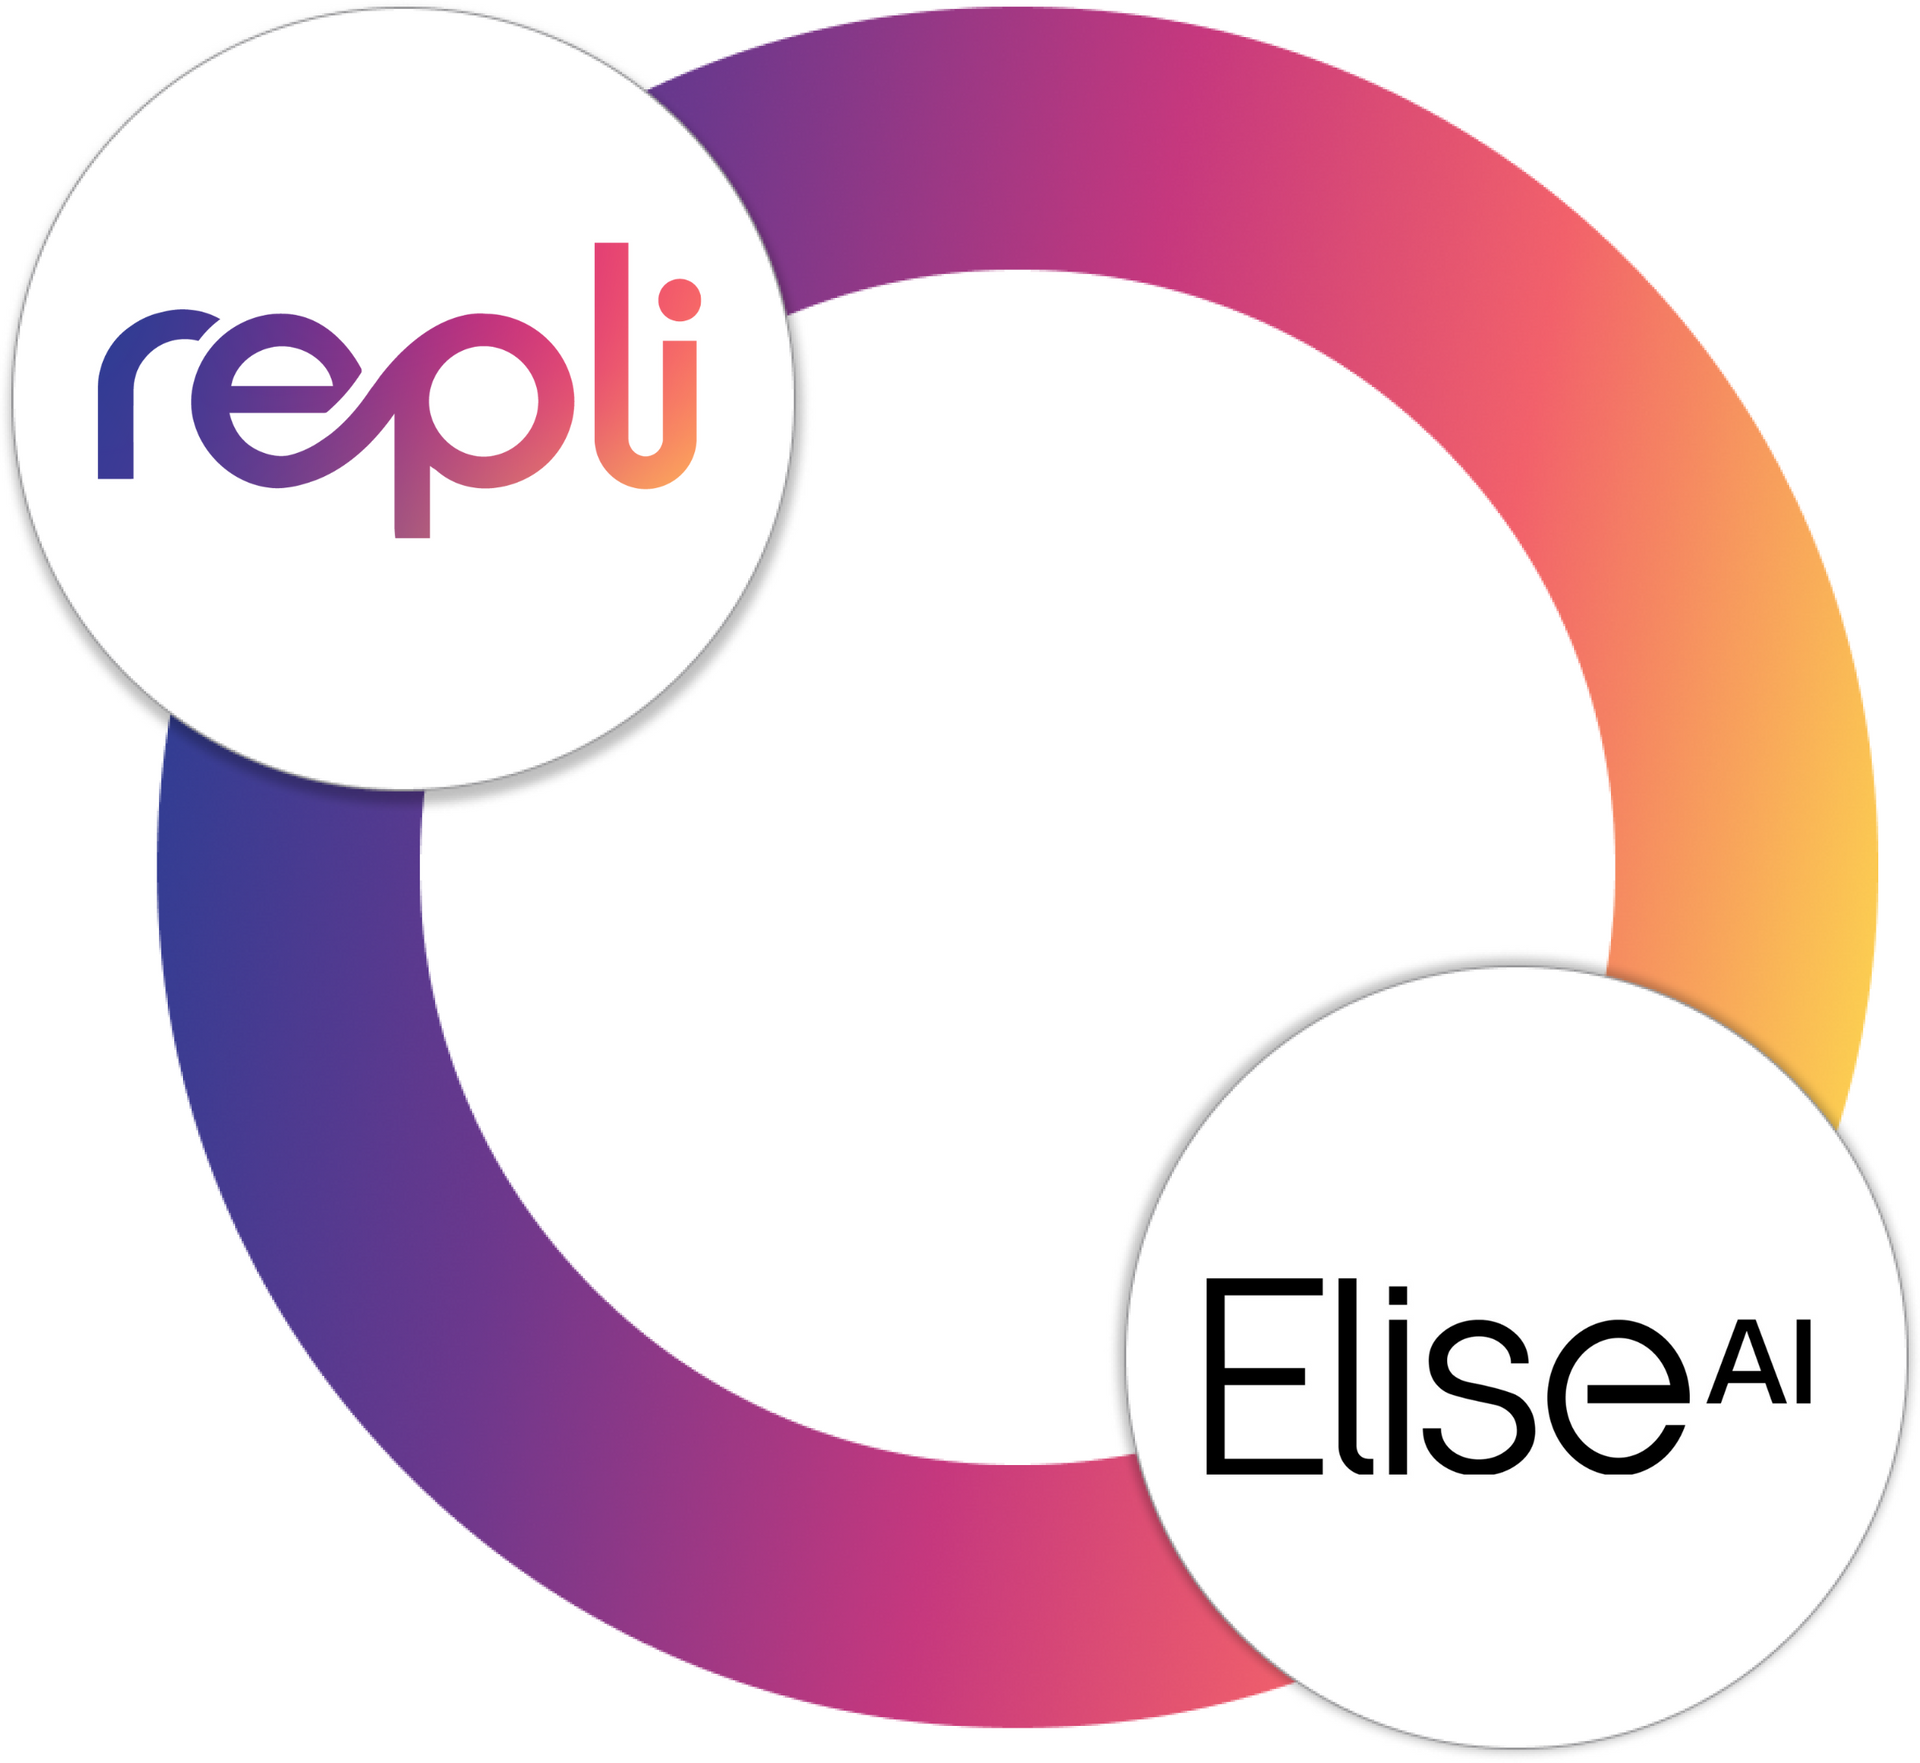 A logo for a company called repli and elise ai